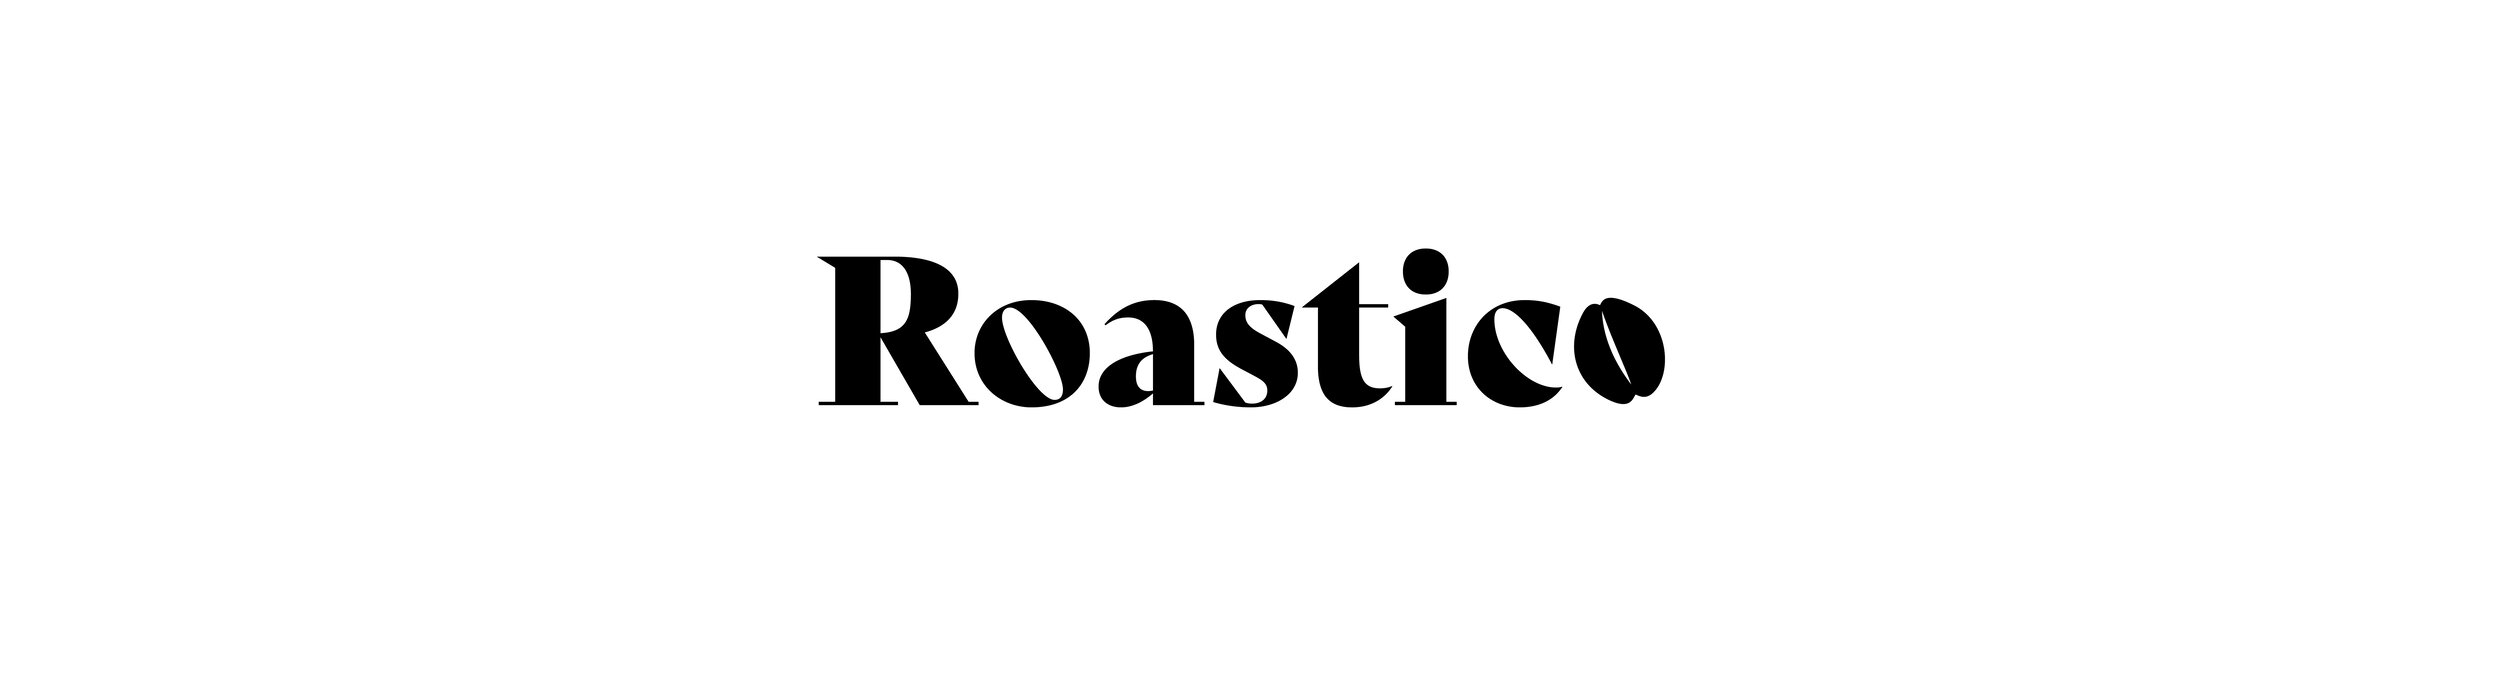 Roastico Brand-07.jpg